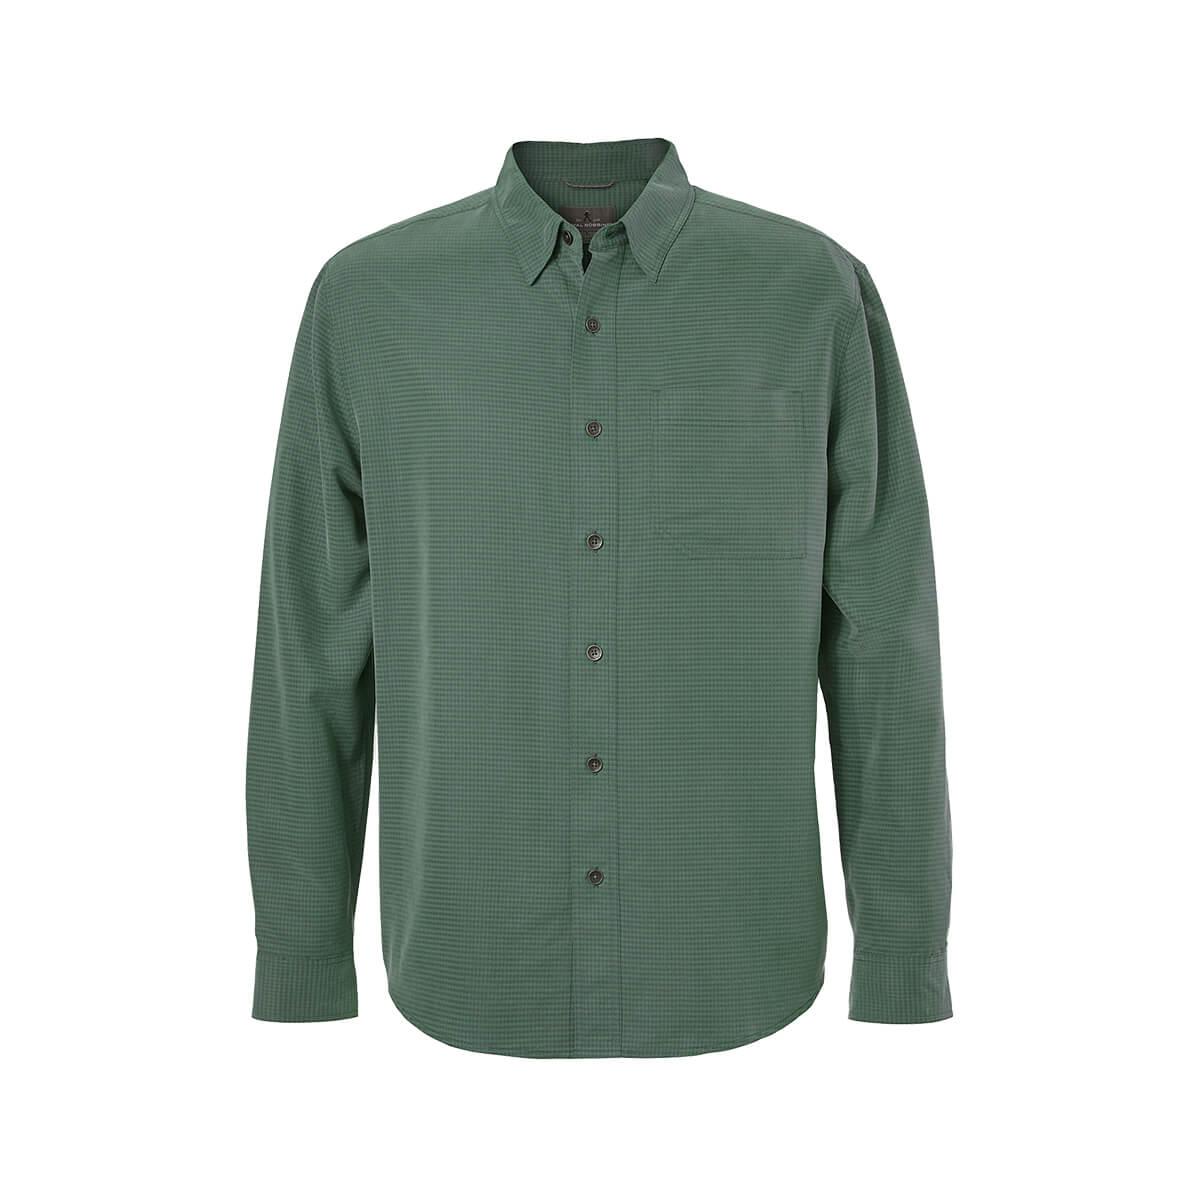 Mast General Store | Men's Desert Pucker Dry Long Sleeve Shirt